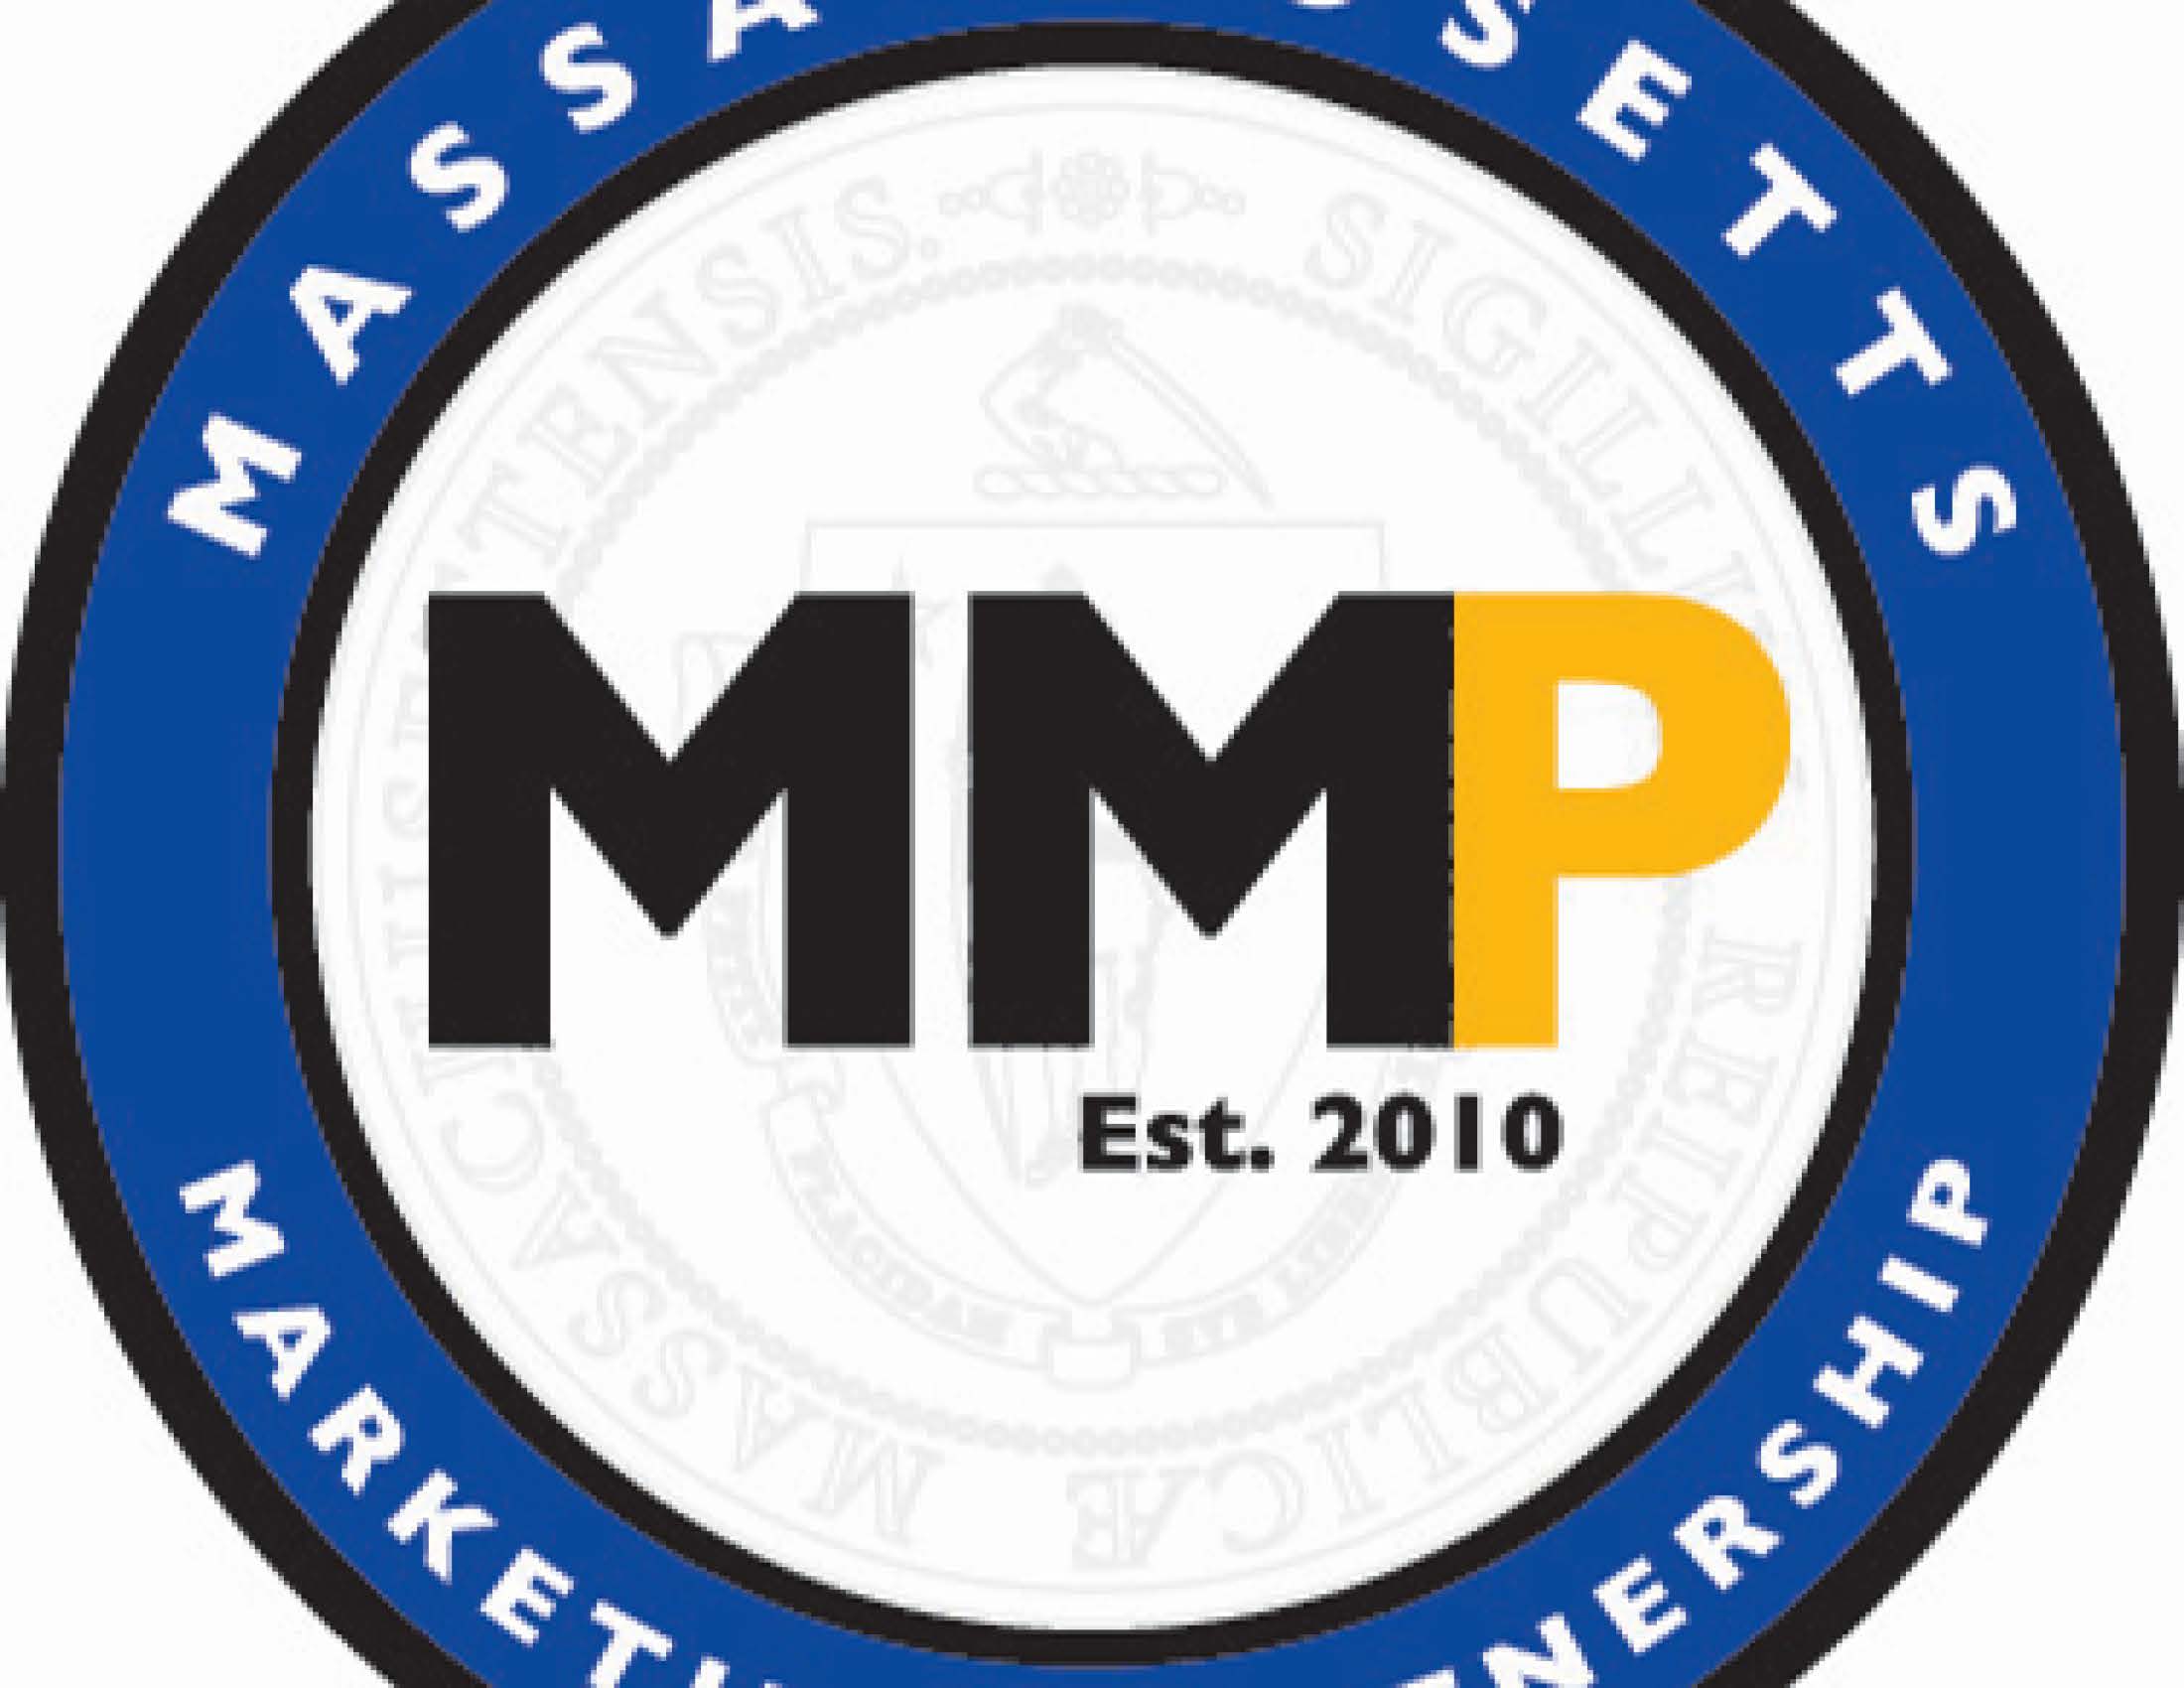 Massachusetts Marketing Partnership